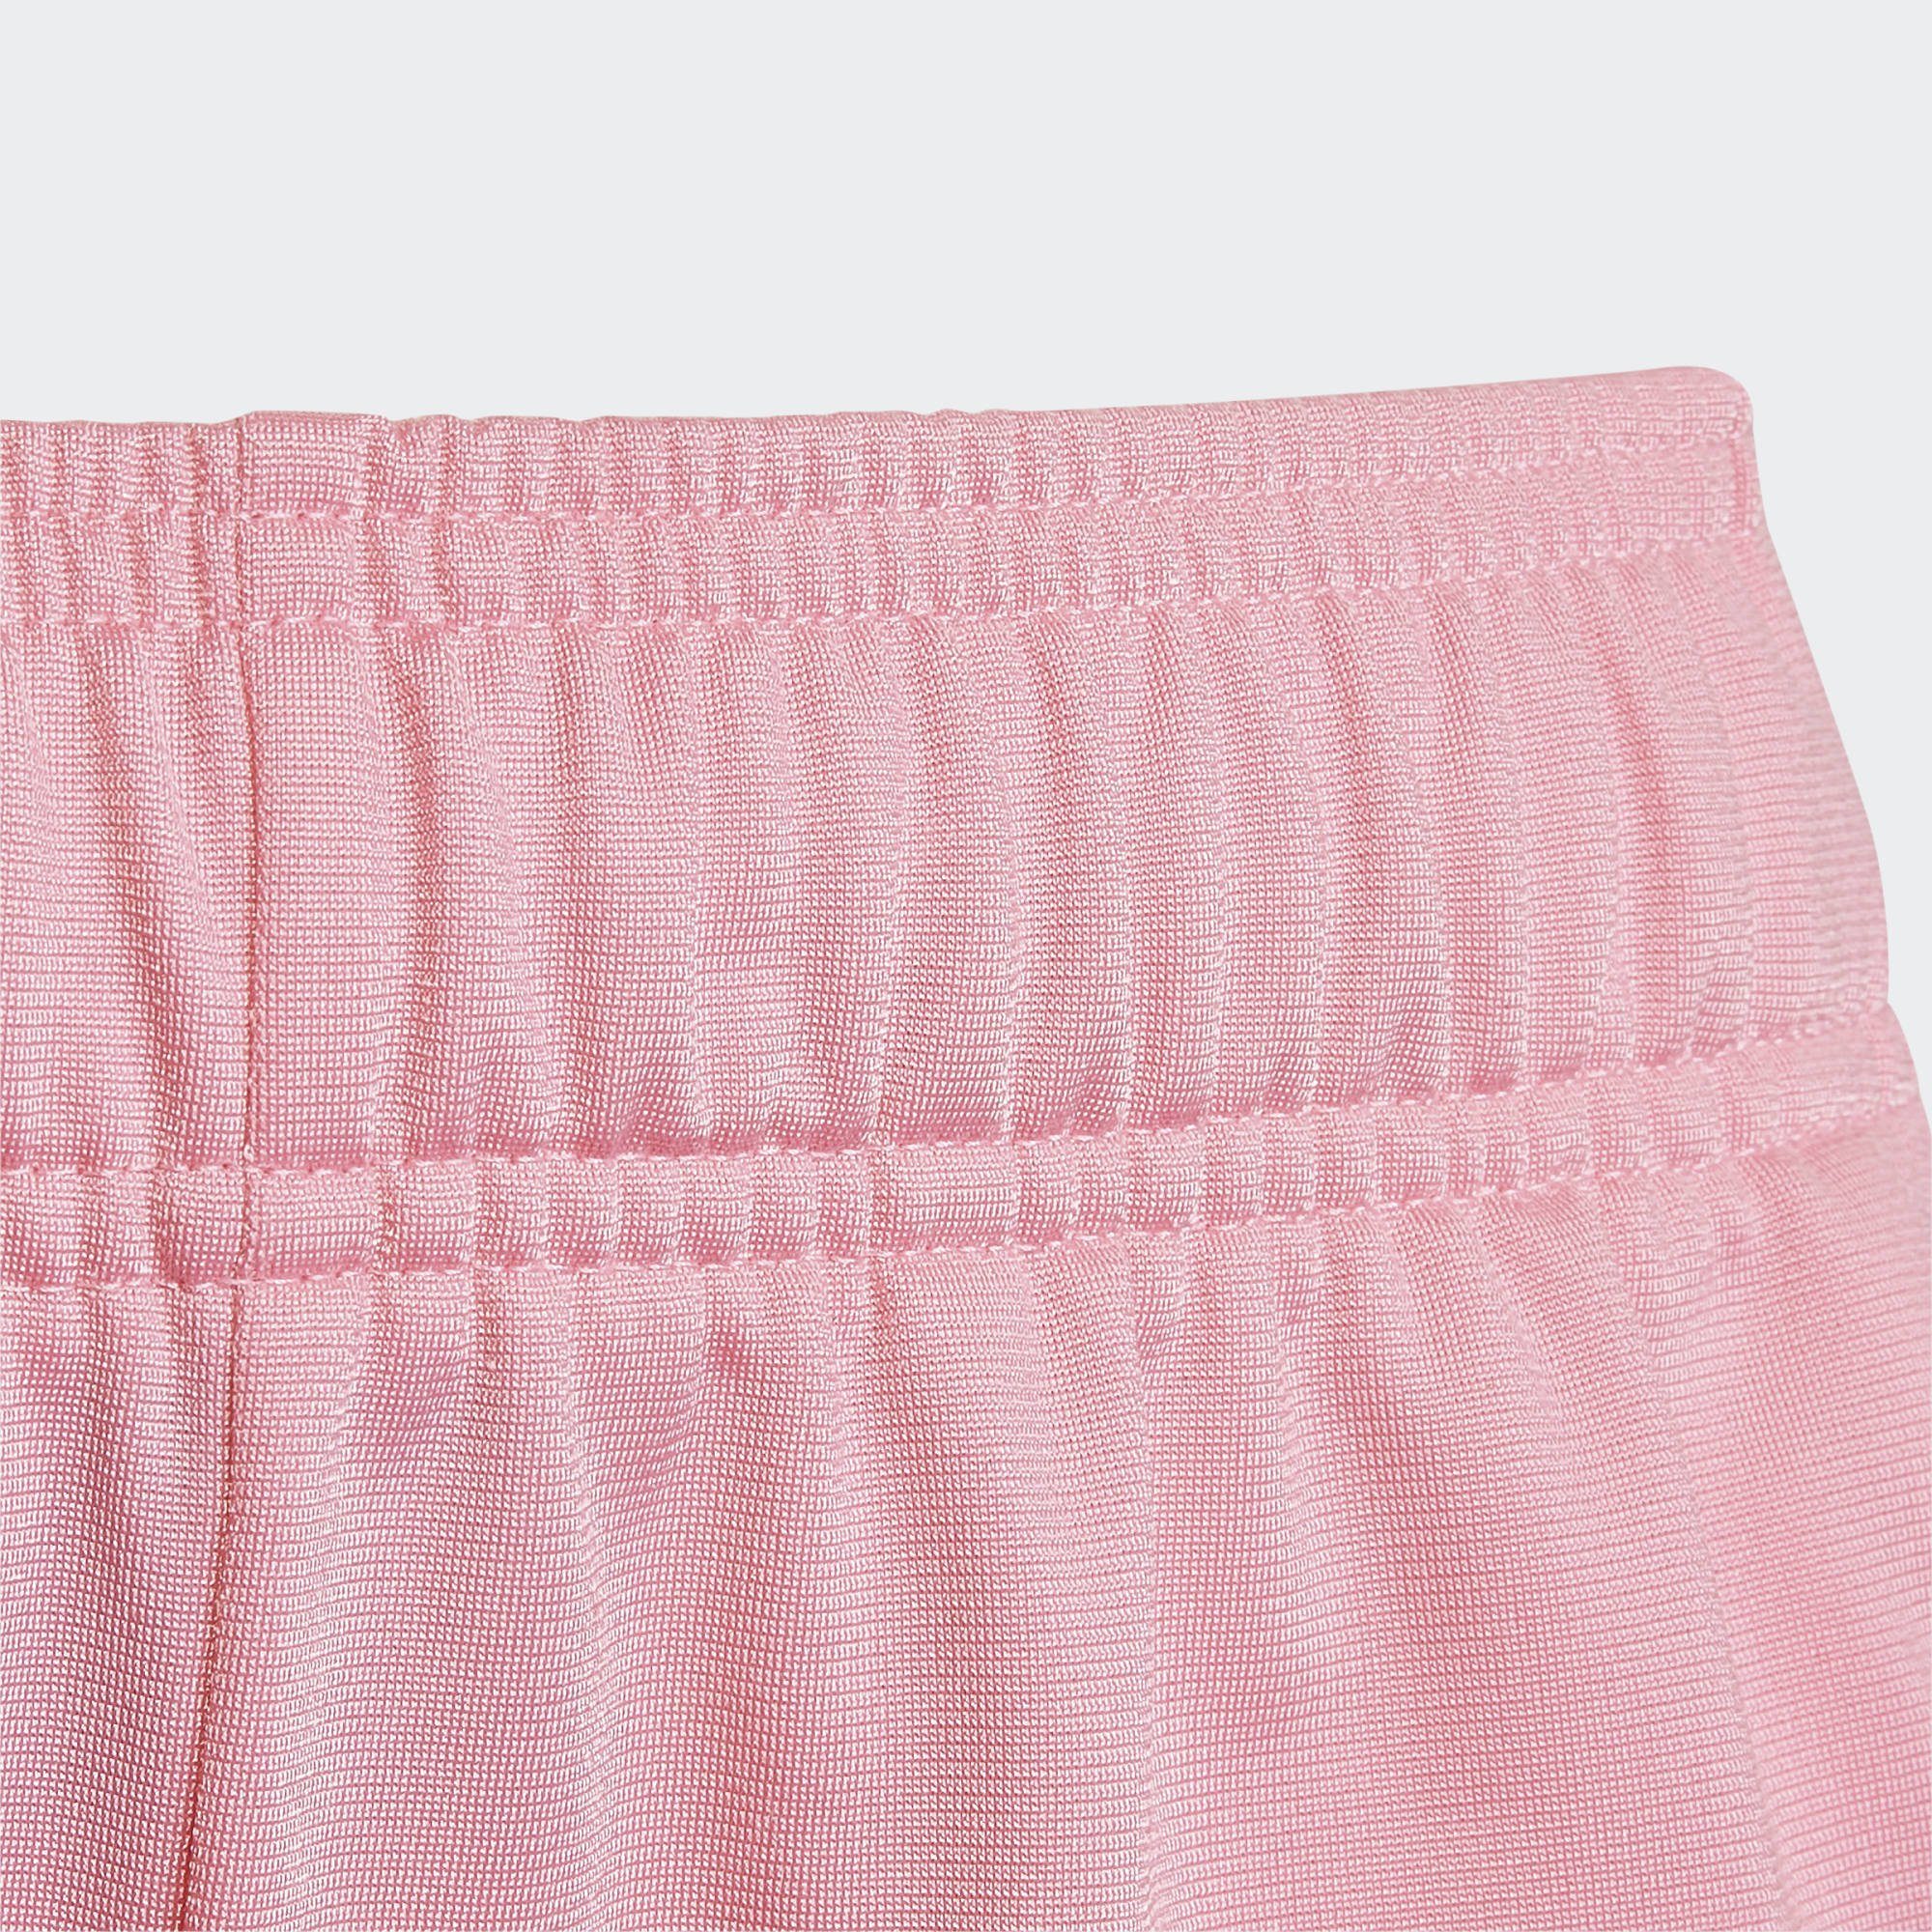 ADICOLOR SST TRAININGSHOSE Bliss Pink Originals Leichtathletik-Hose adidas